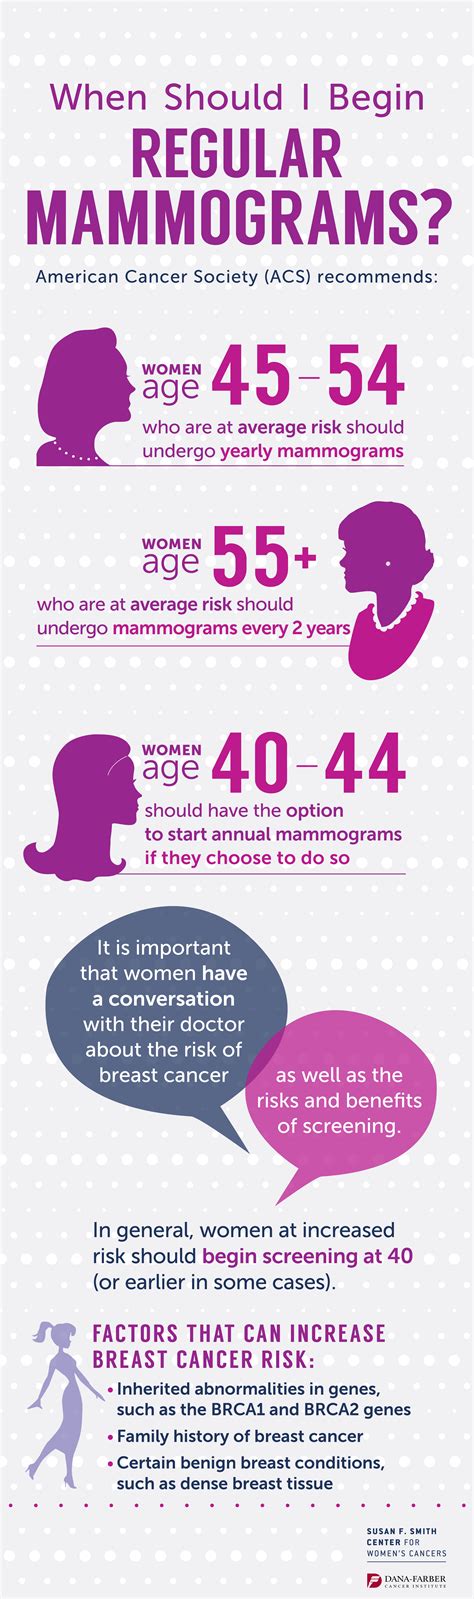 When Should I Begin Regular Mammograms Infographic Dana Farber Cancer Institute